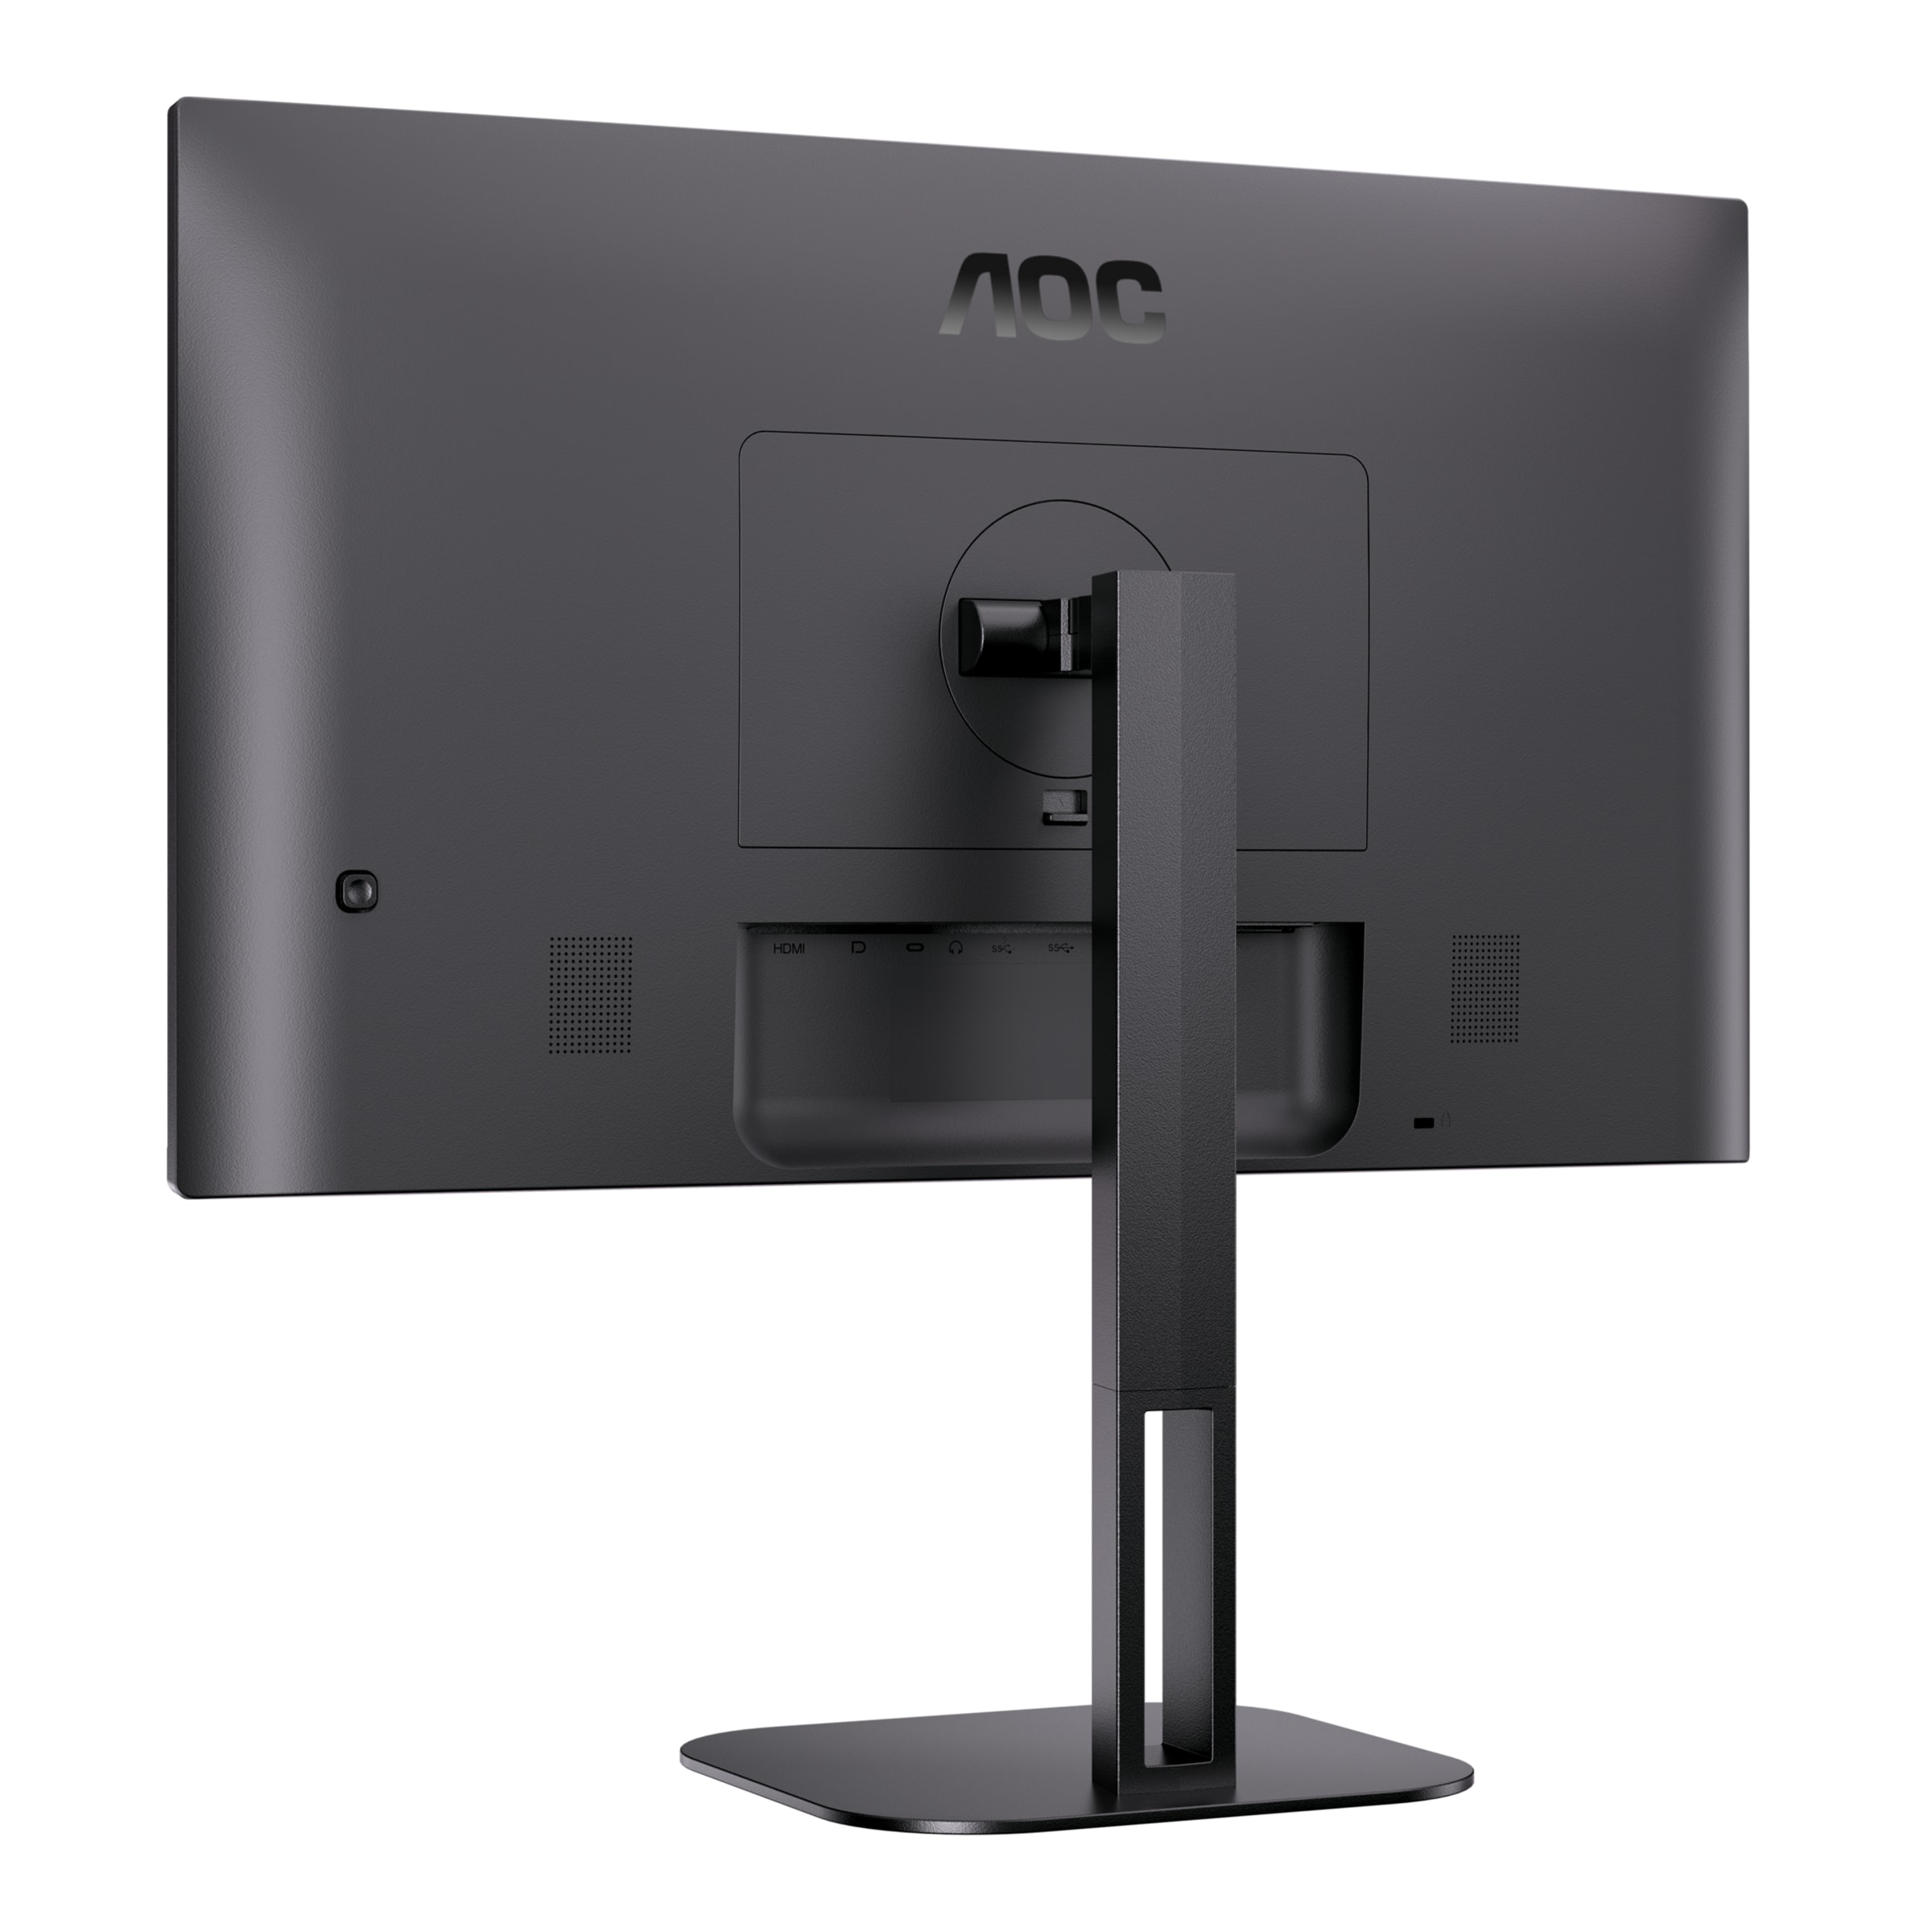 AOC: Announces New V5 Series Monitors